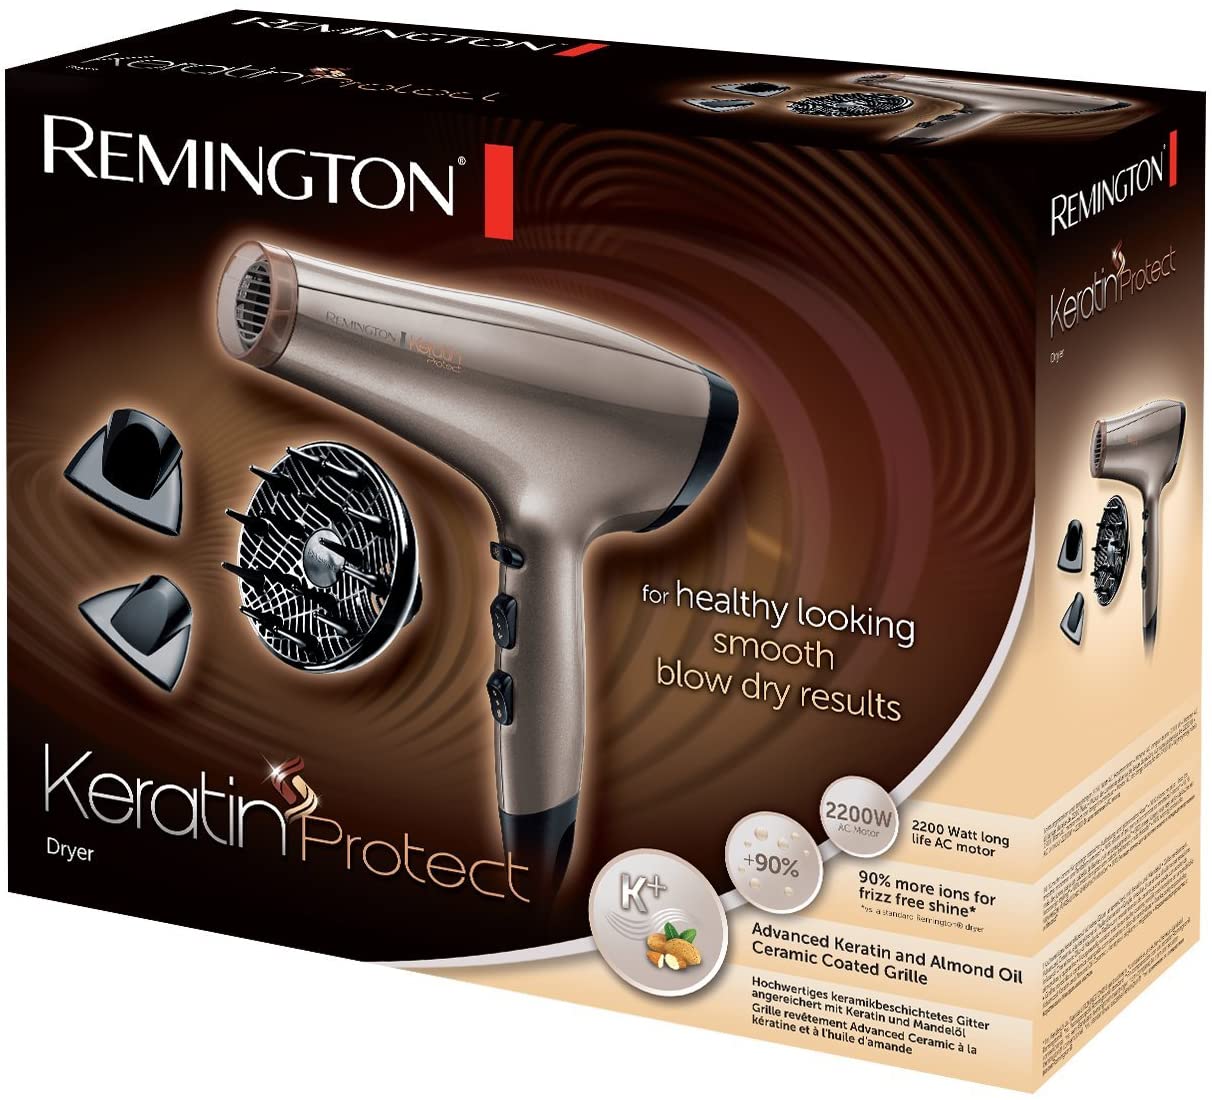 REMINGTON AC8002 Keratin Protect Dryer 2200W